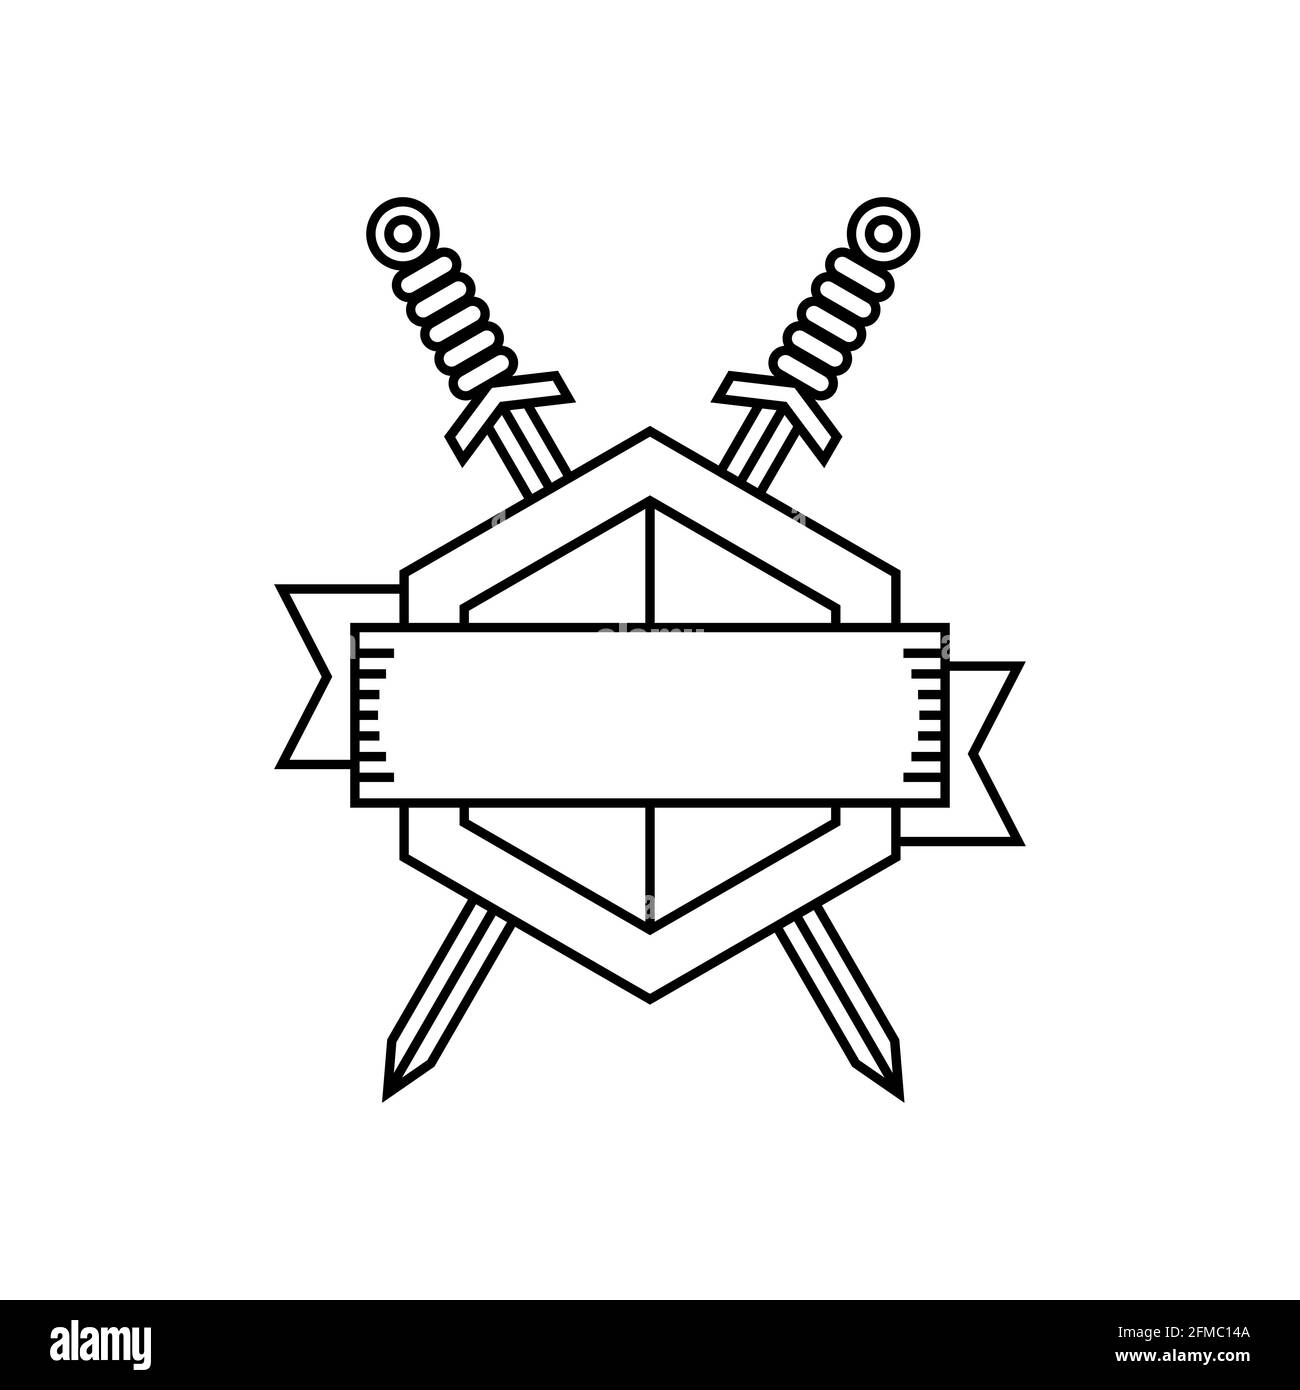 A logo of 2 swords crossed in a gamer style.' Mug